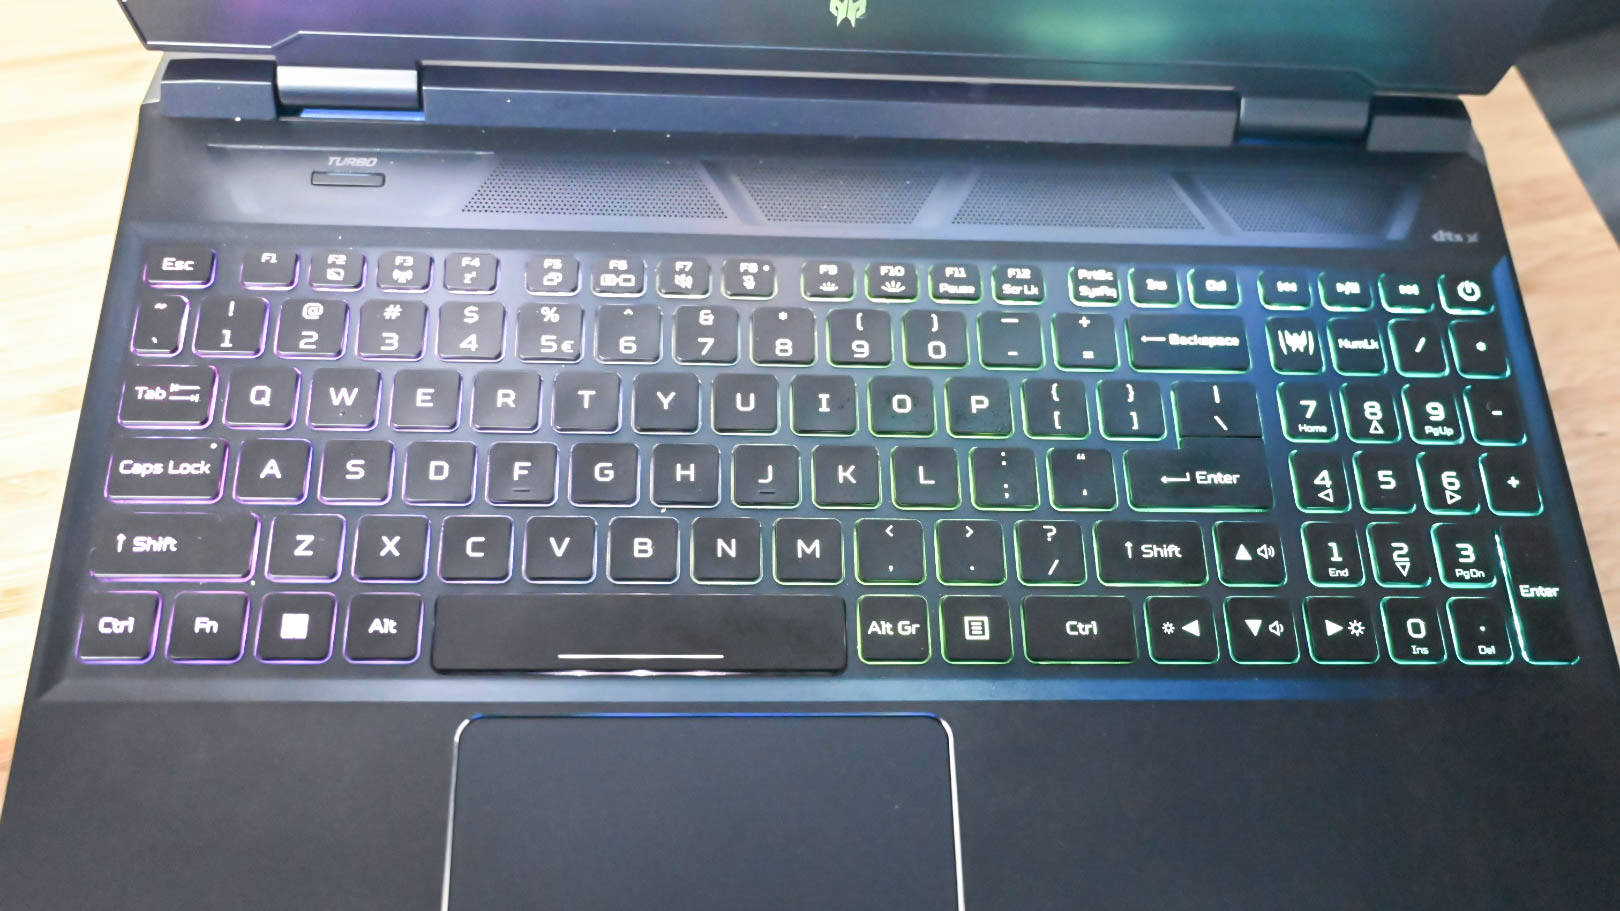 Acer Predator Helios 300 SpatialLabs Edition review